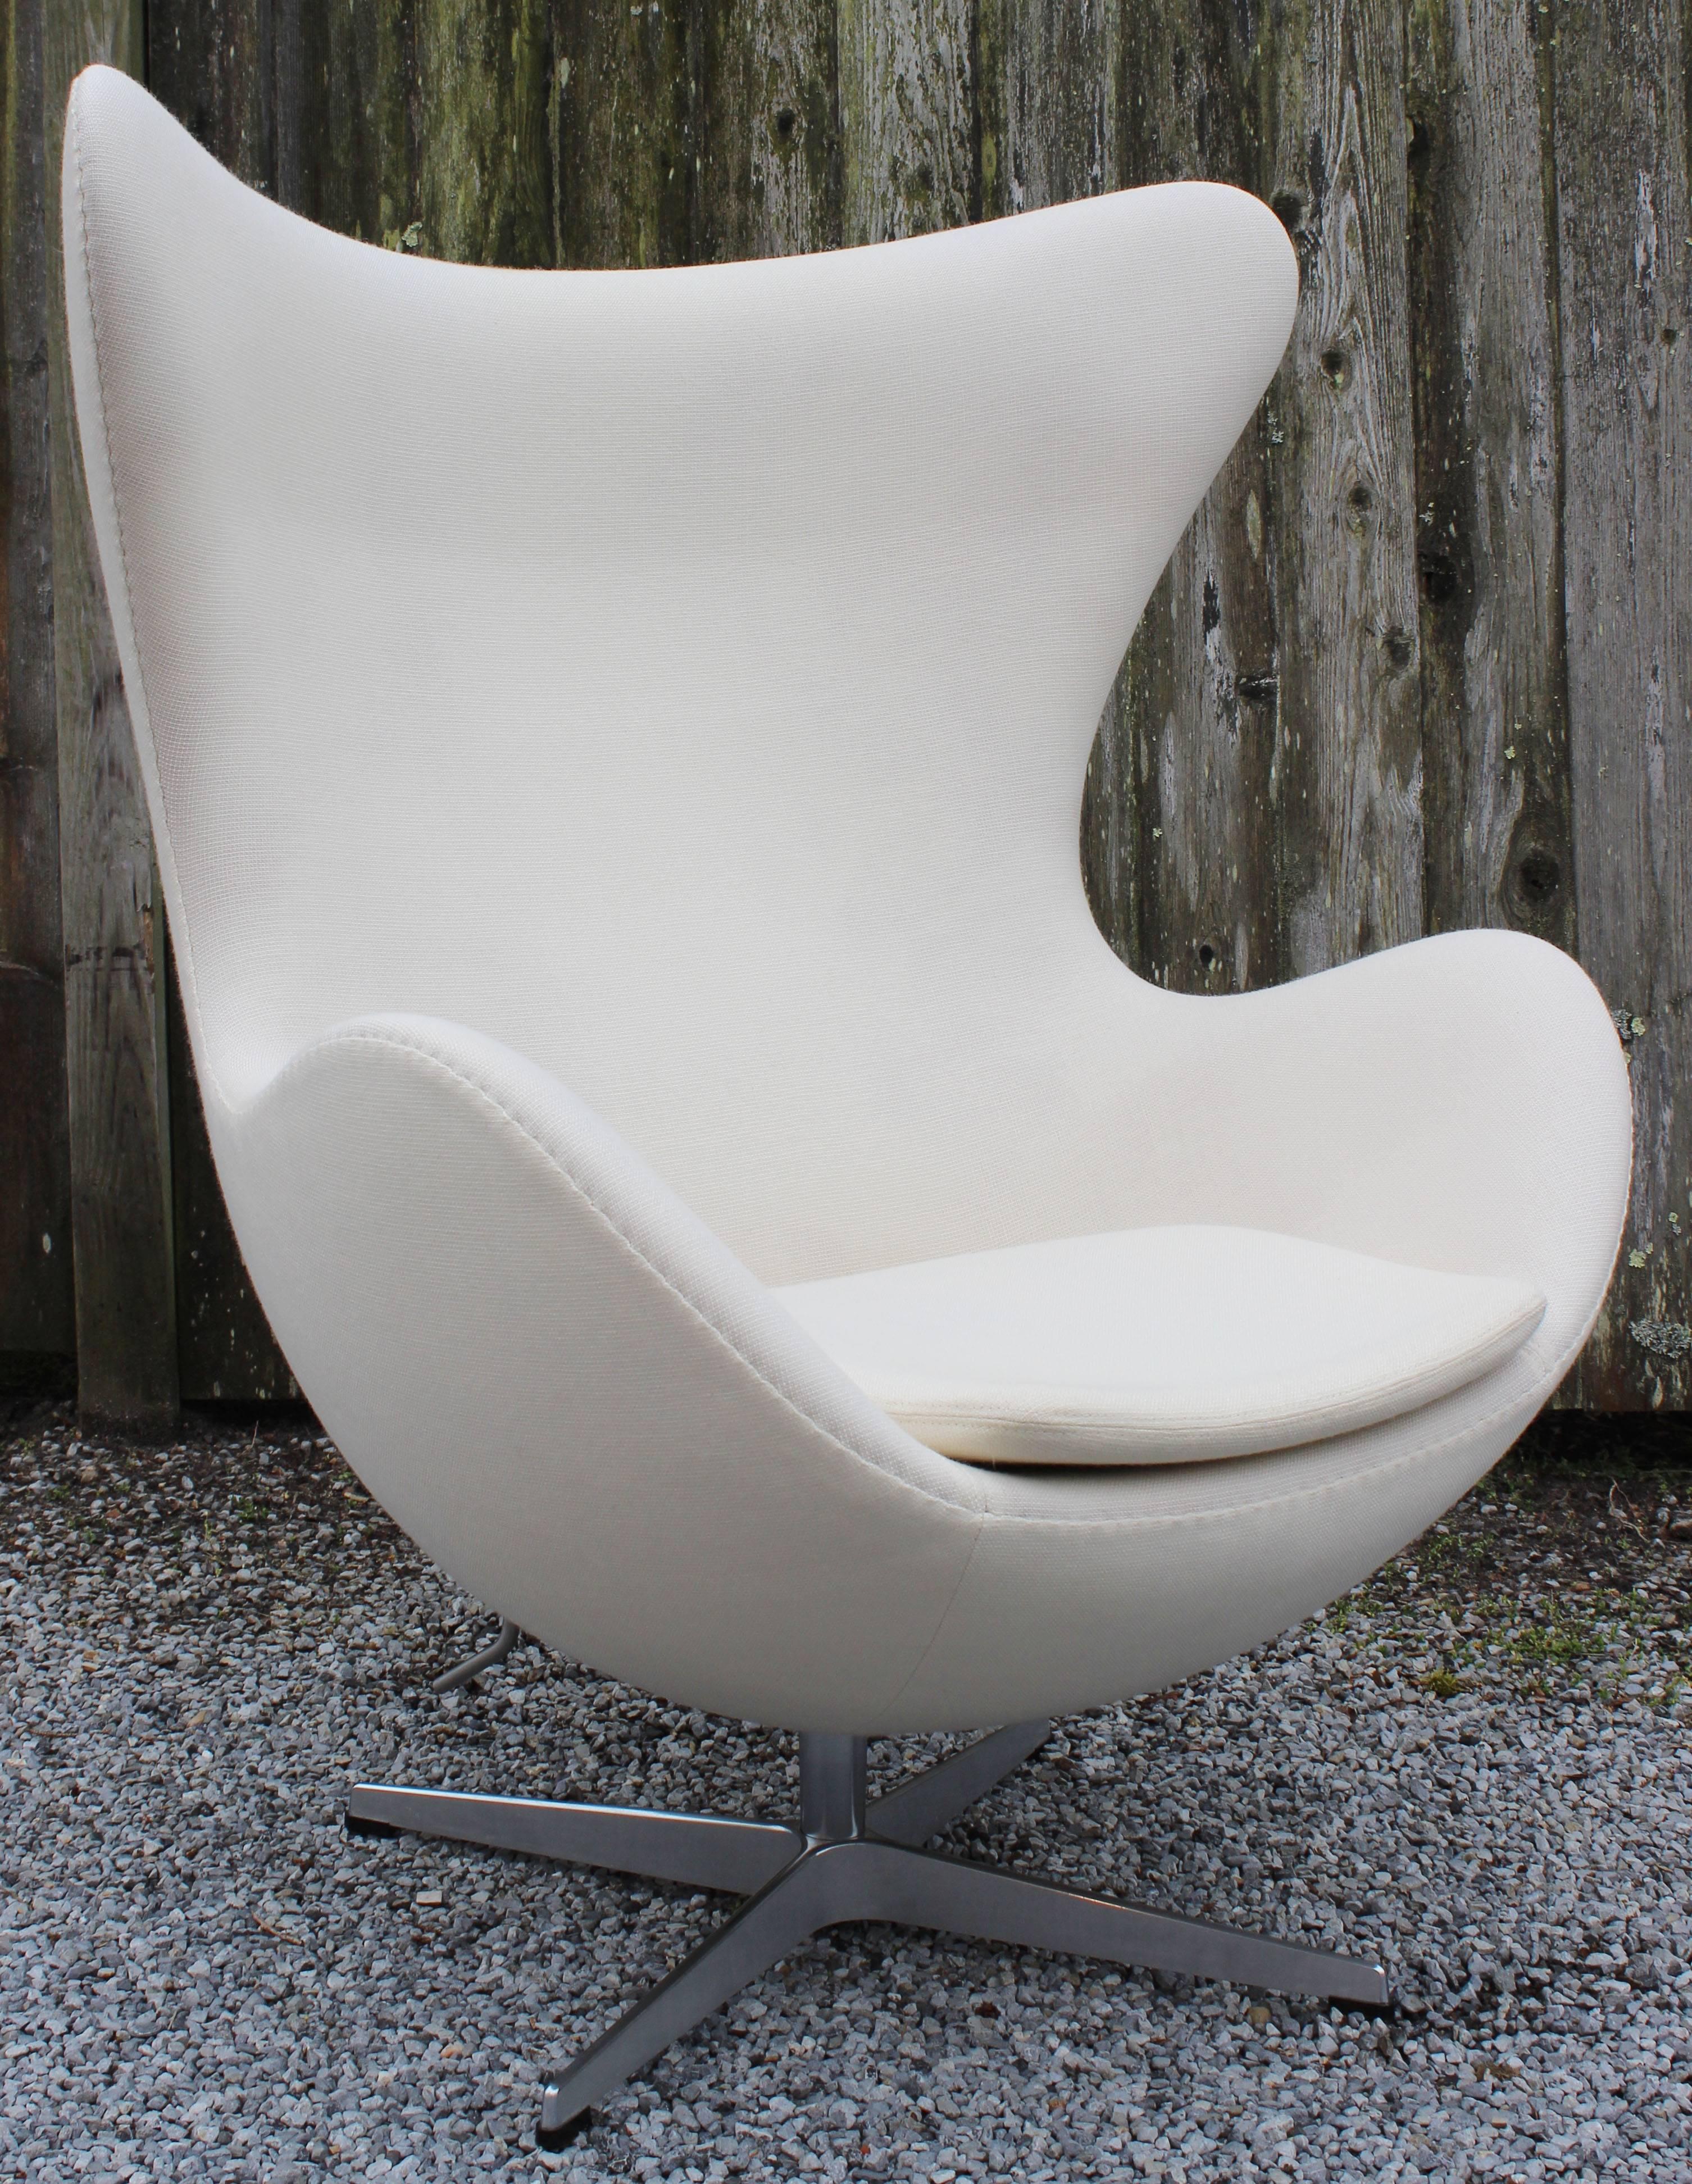 An Arne Jacobsen egg chair featuring swivel seat and adjustable tilt, for Fritz Hansen.